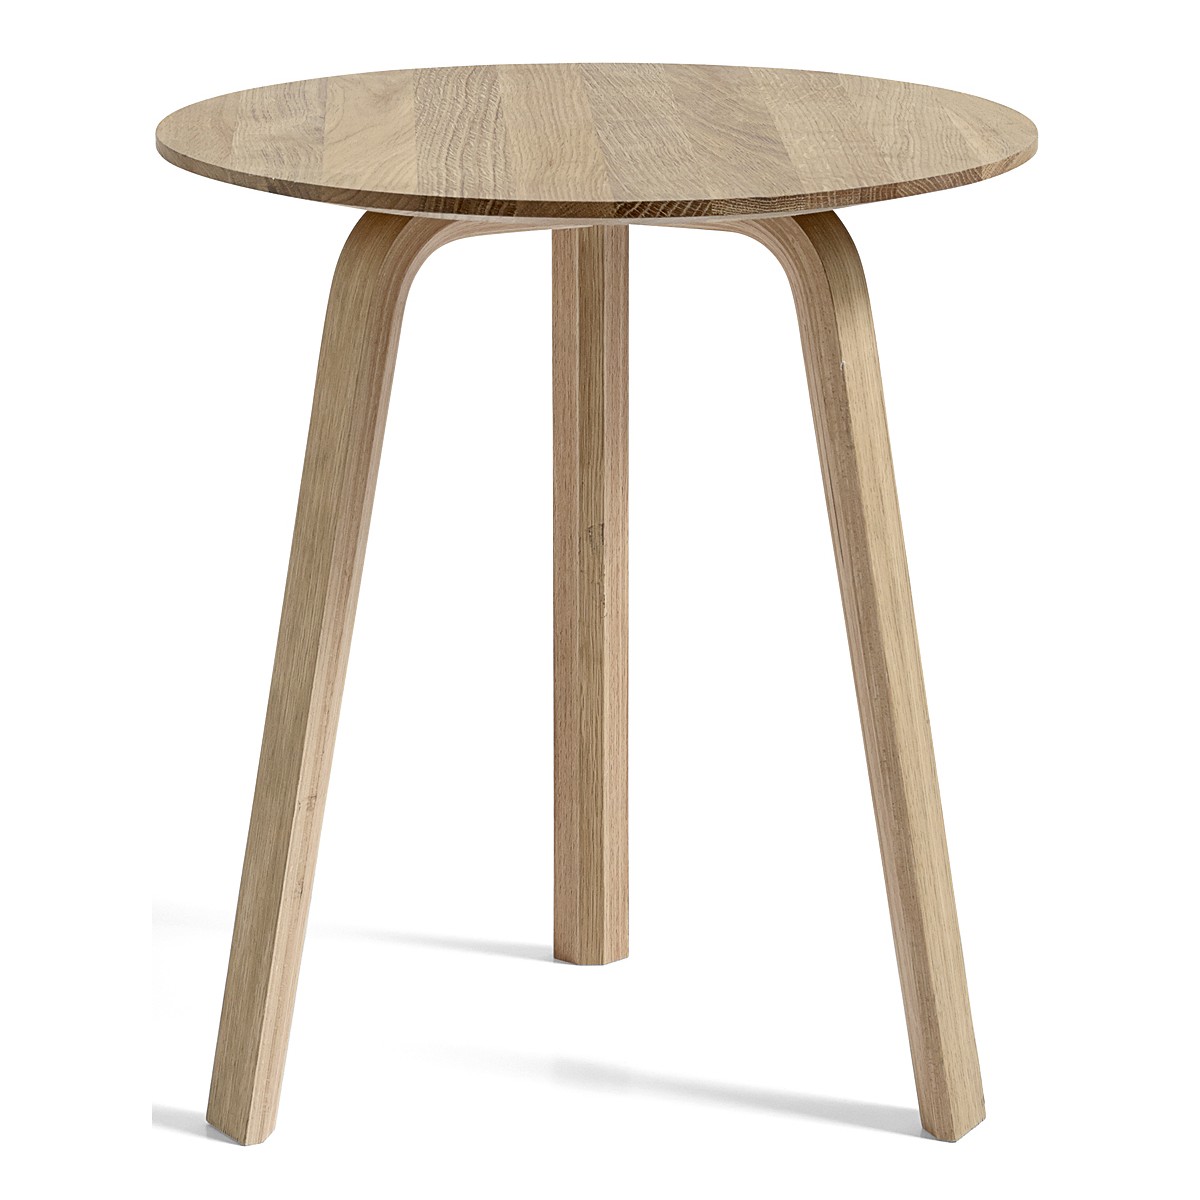 matt lacquered oak - Ø45xH49cm - Bella coffee table